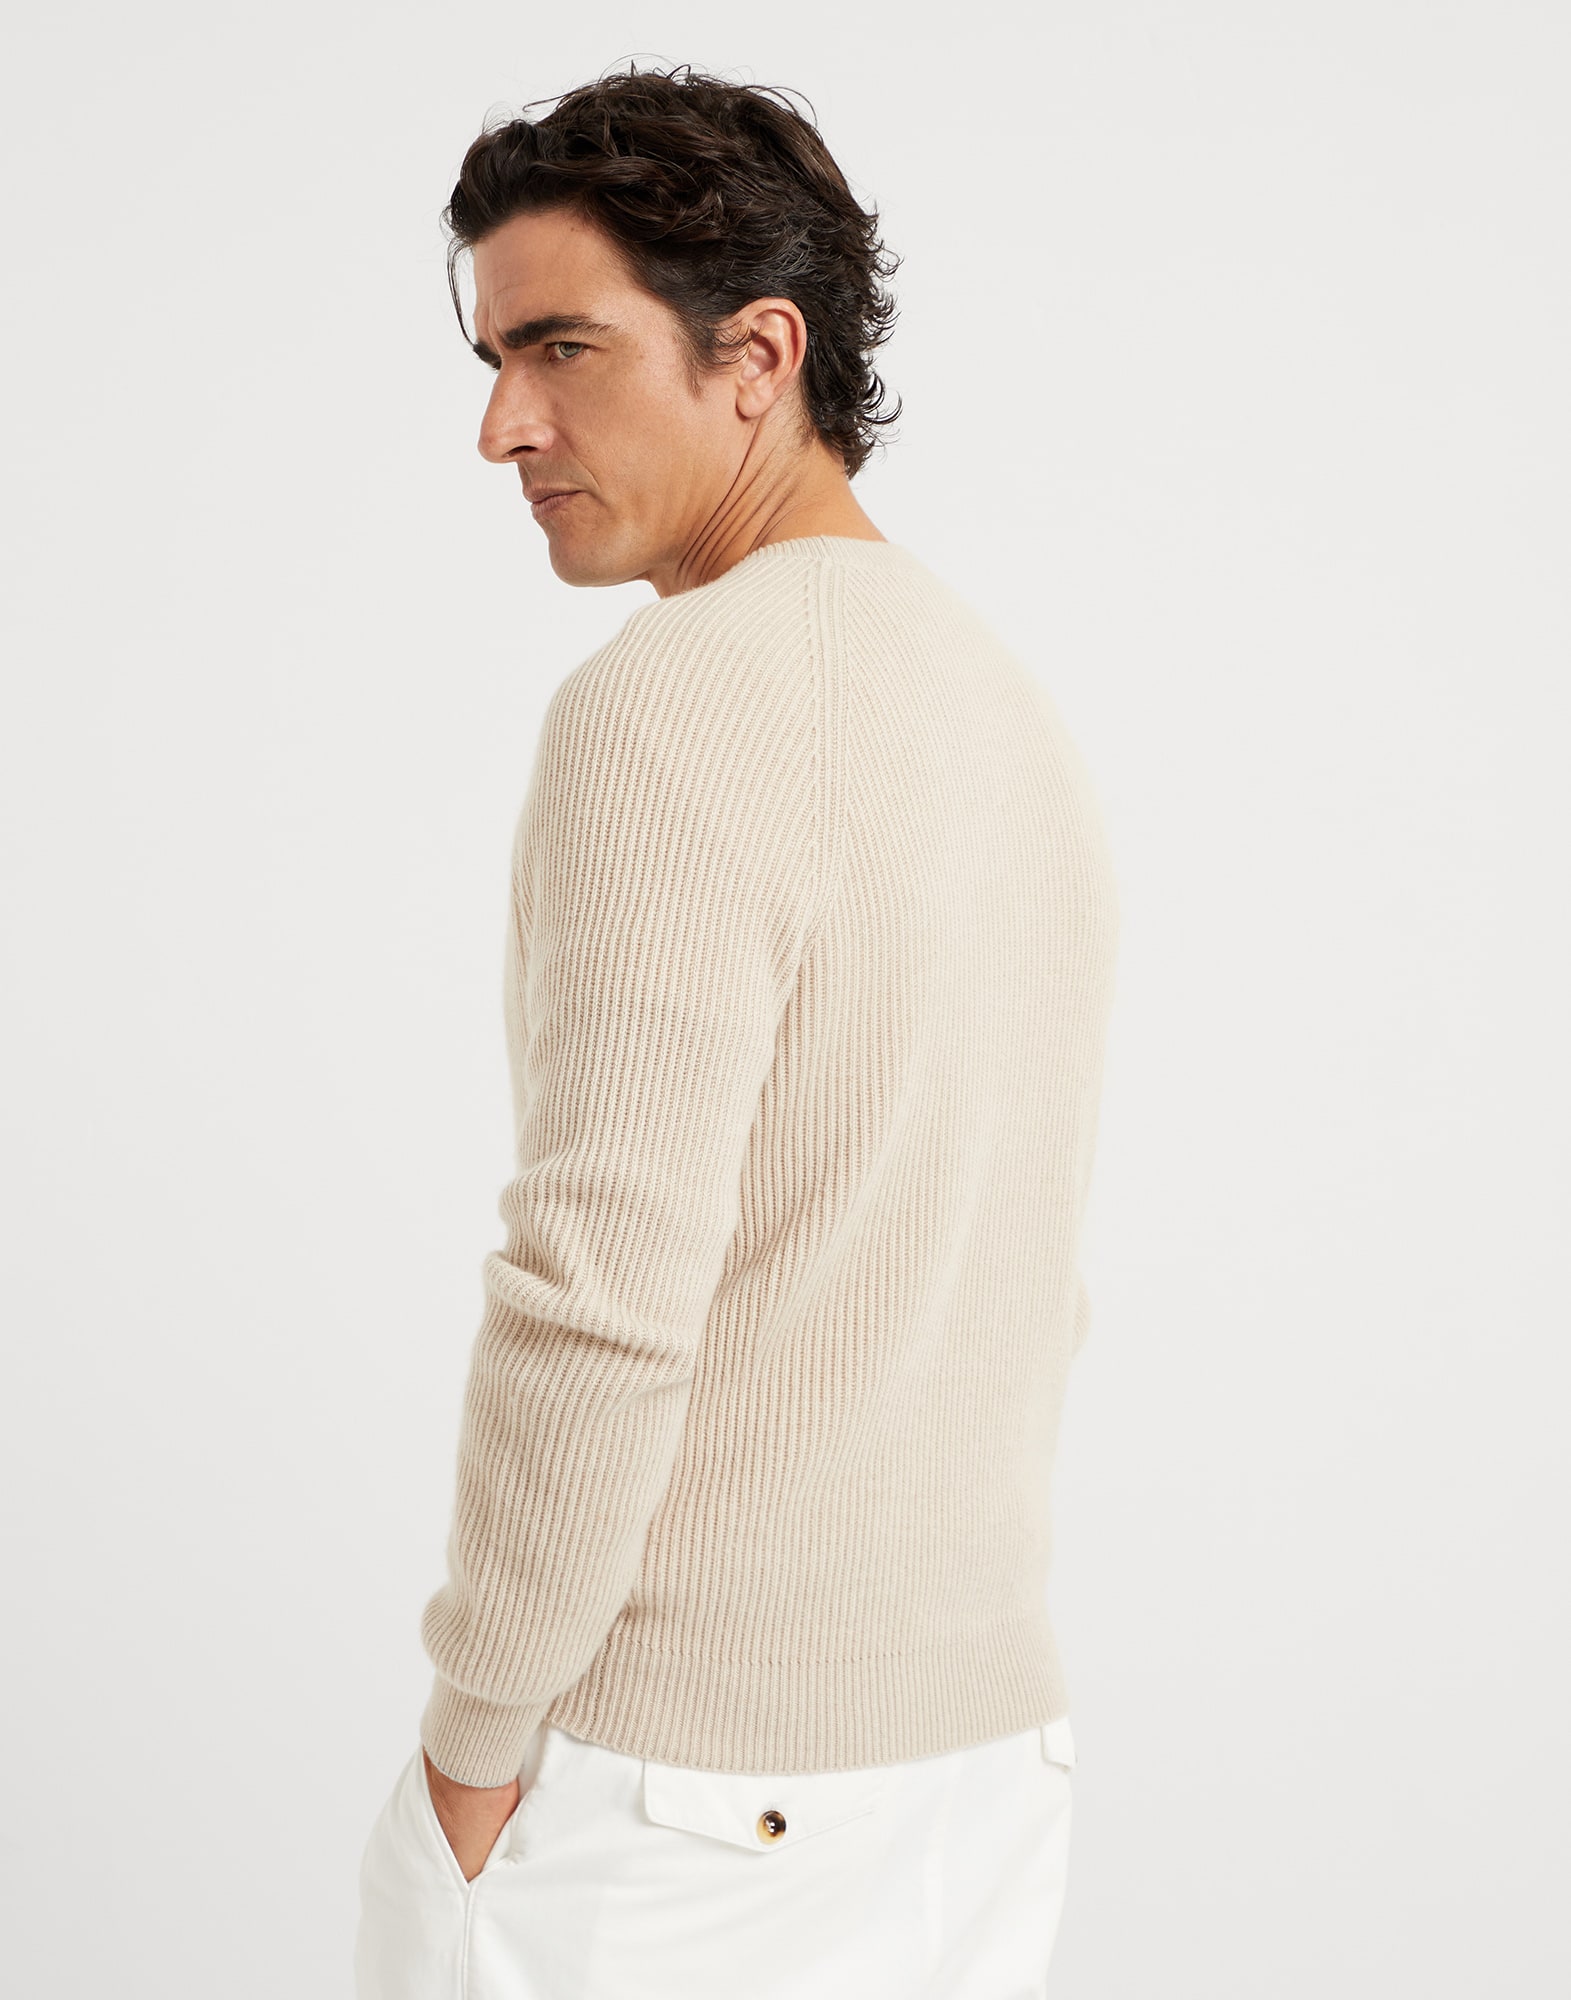 English Rib knit sweater (241M2274100) for Man | Brunello Cucinelli